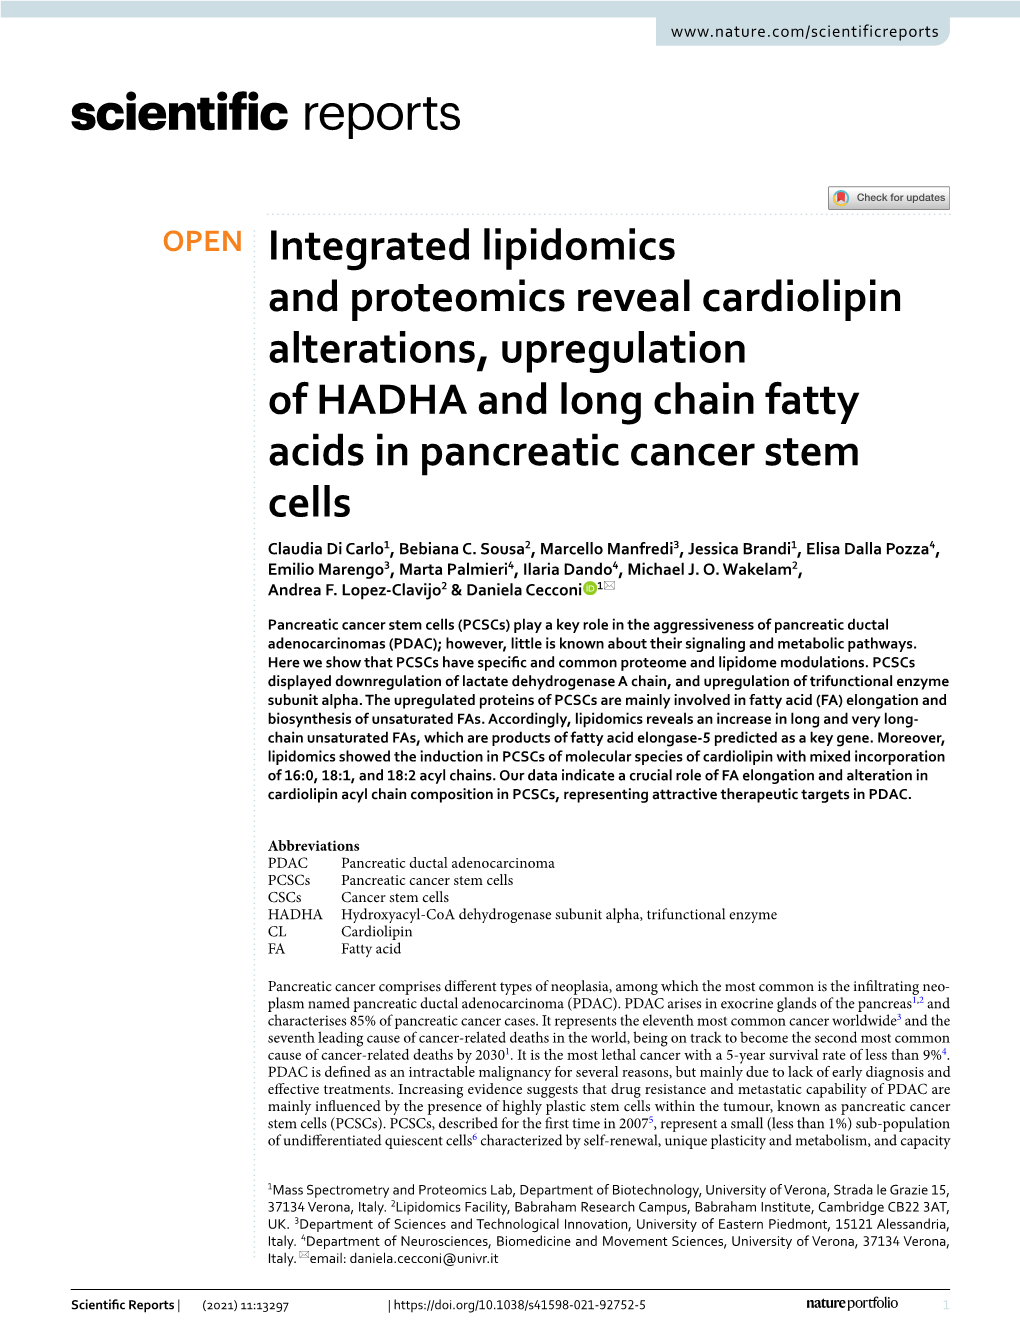 Integrated Lipidomics and Proteomics Reveal Cardiolipin Alterations